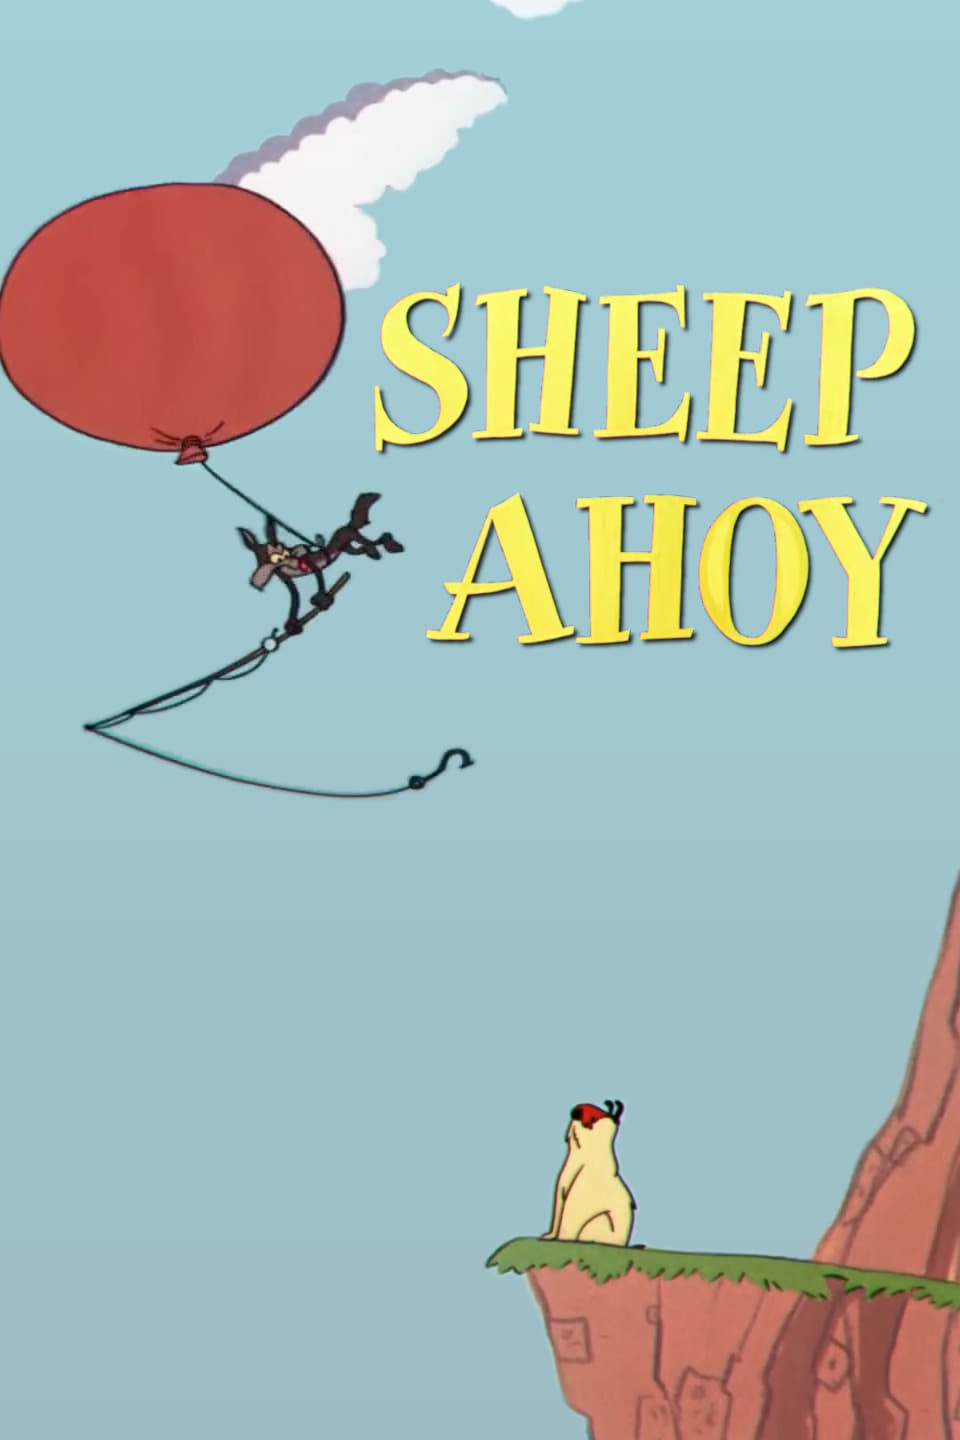 Sheep Ahoy (1954)